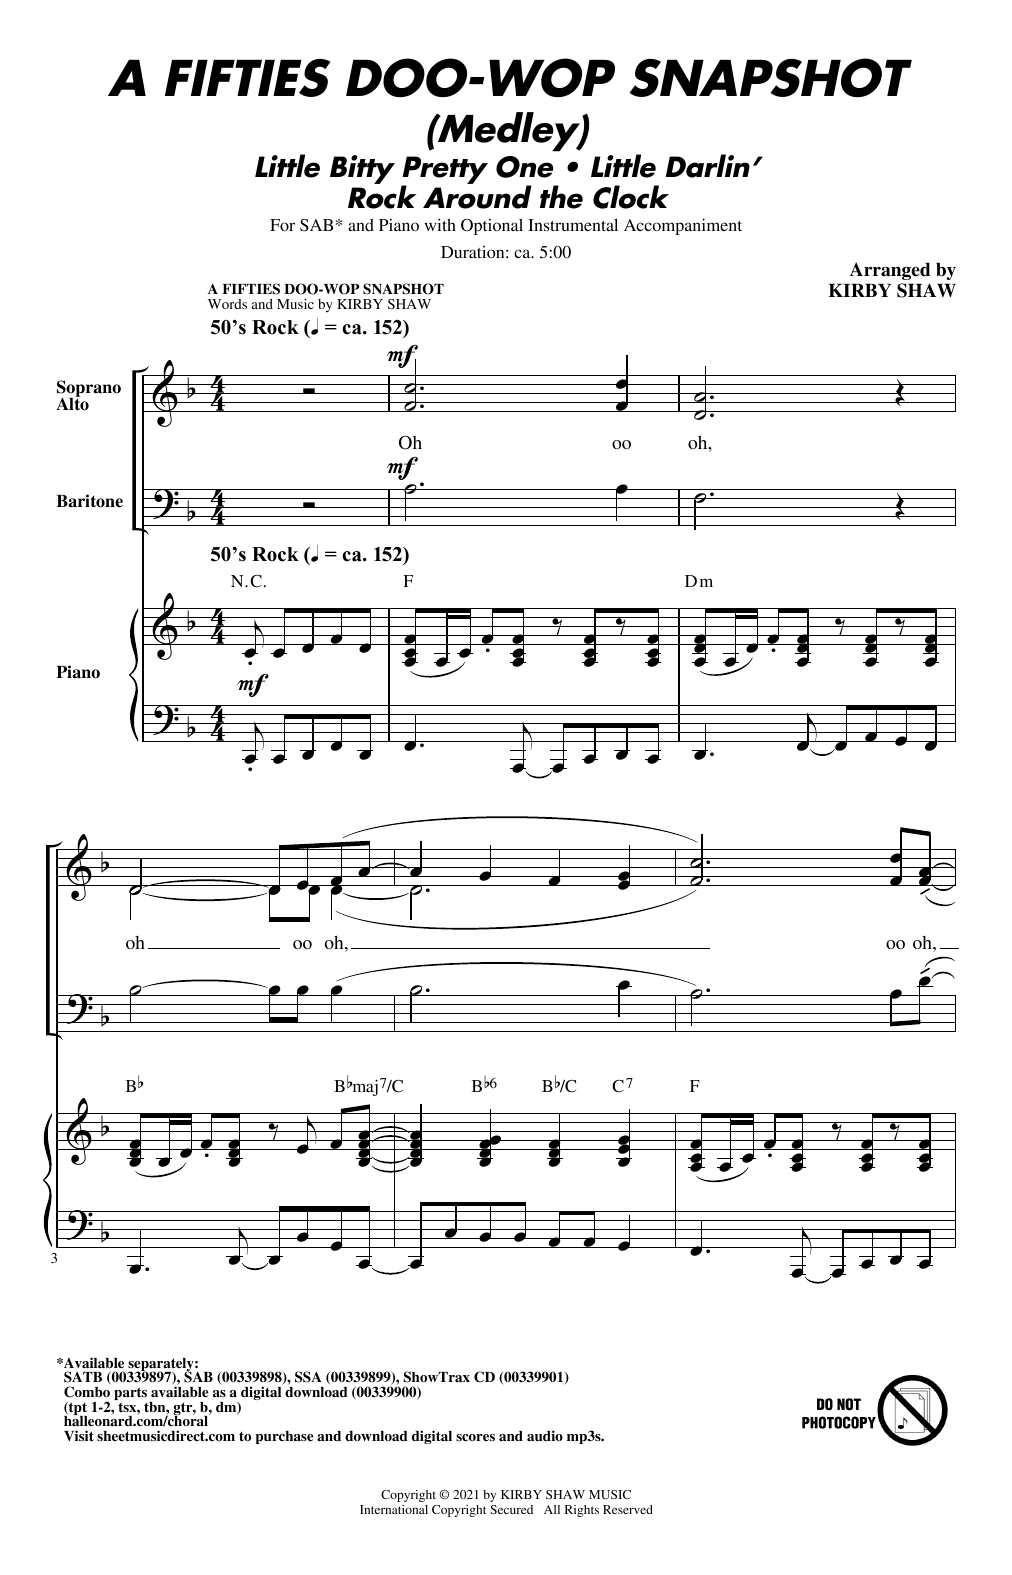 Kirby Shaw A Fifties Doo-Wop Snapshot (Medley) Sheet Music Notes & Chords for SSA Choir - Download or Print PDF